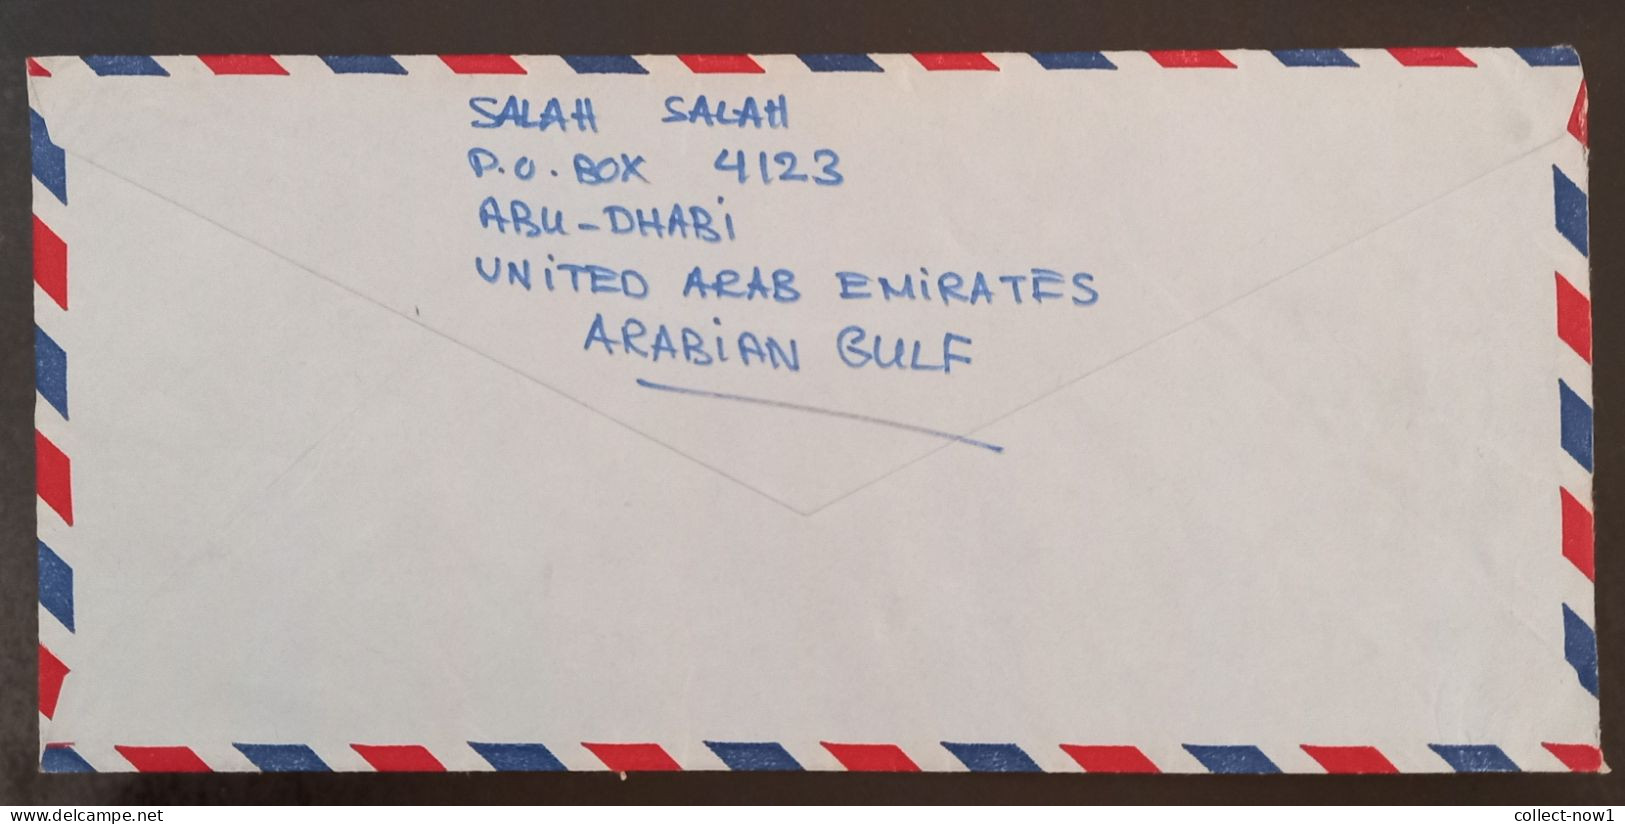 #45    UAE Abu Dhabi  Air Mail Cover Sent To Yugoslavia - 1976 - Abu Dhabi